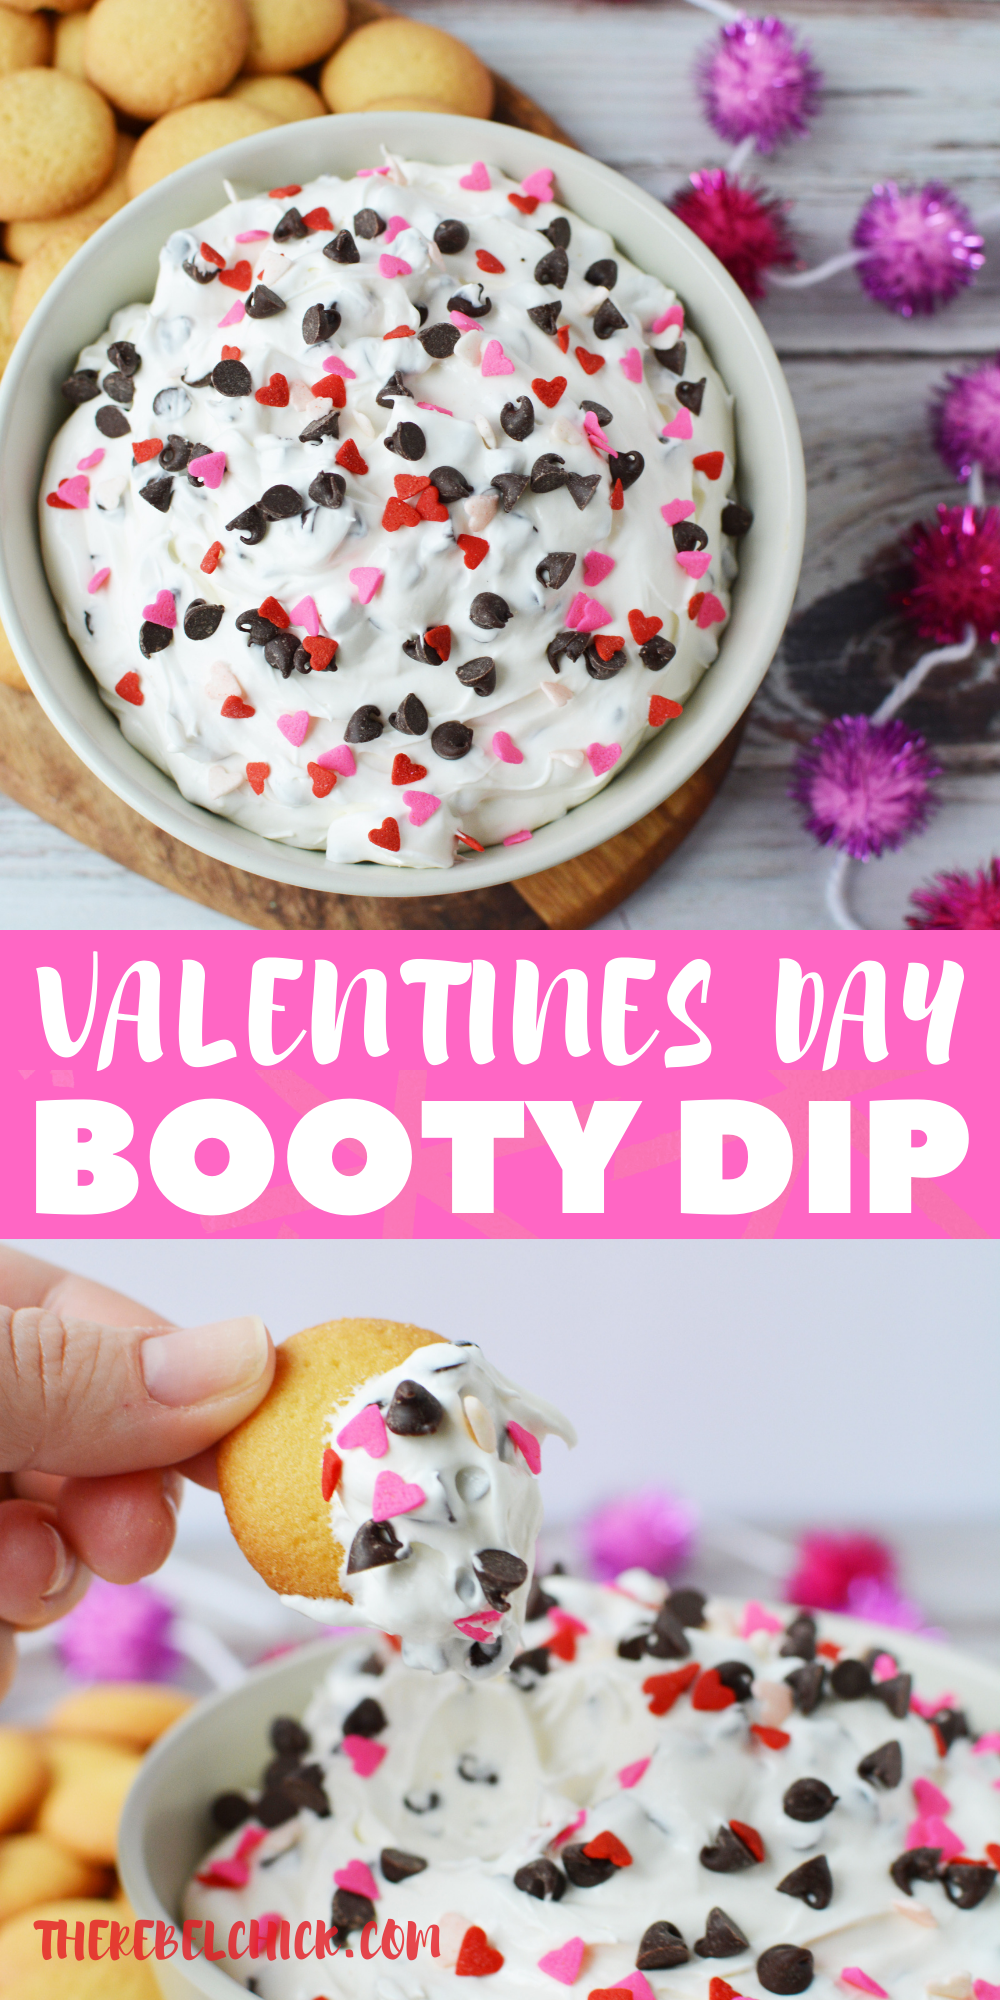 Valentine's Booty Dip Recipe for Valentine's Day Dessert